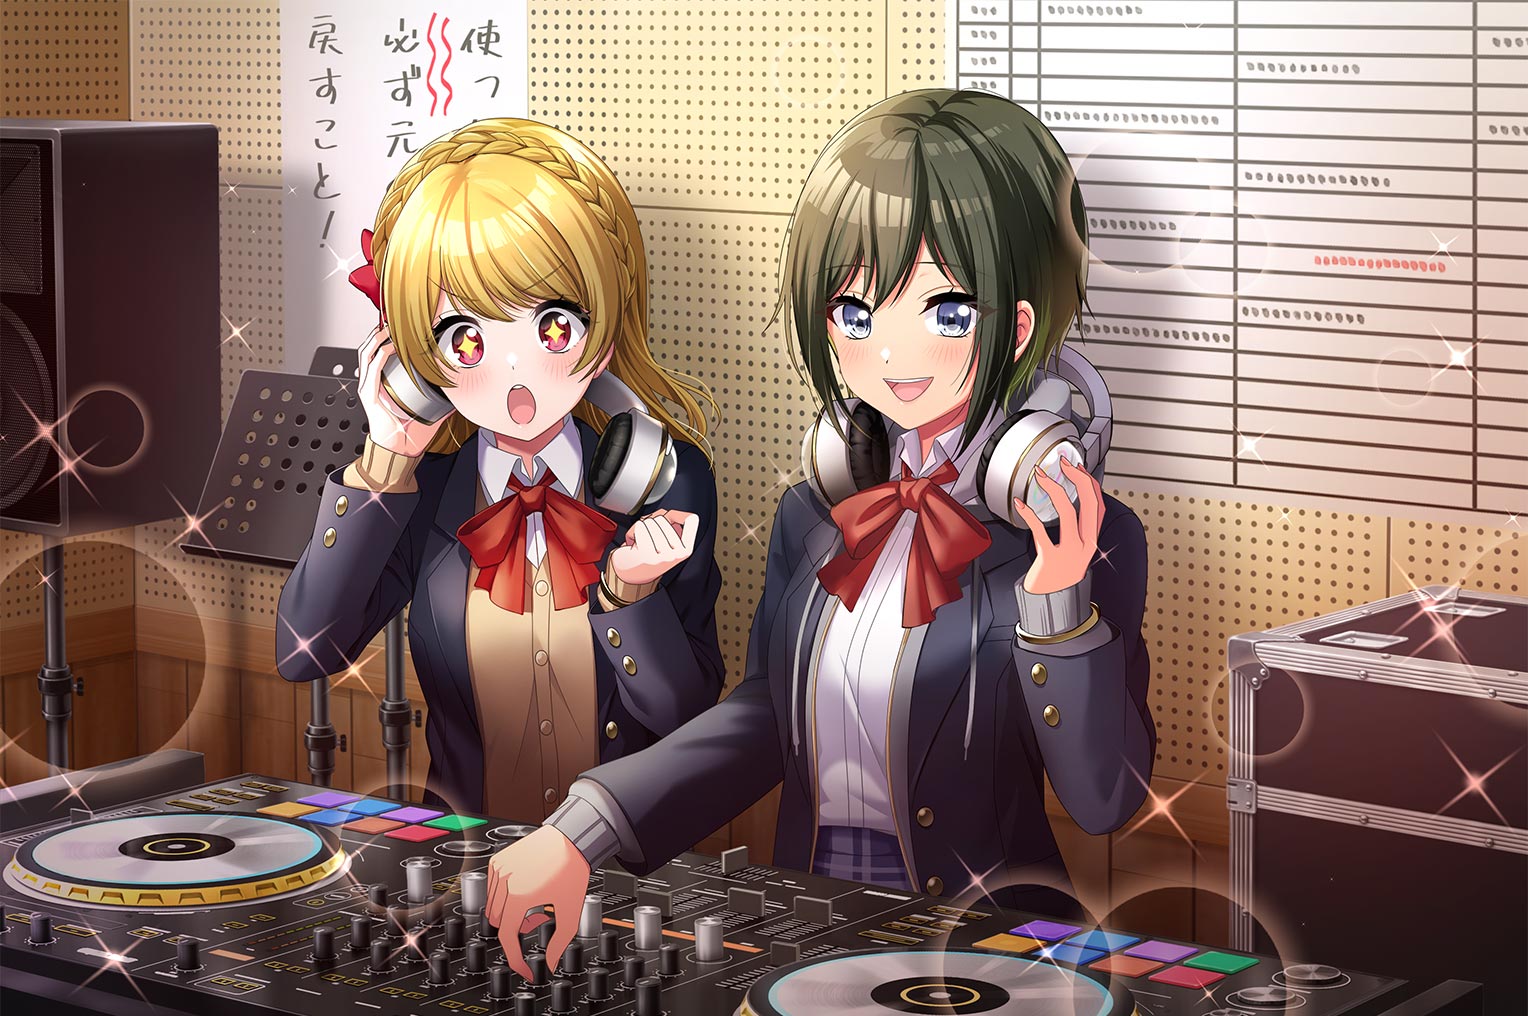 Maho teaching Rinku how to DJ